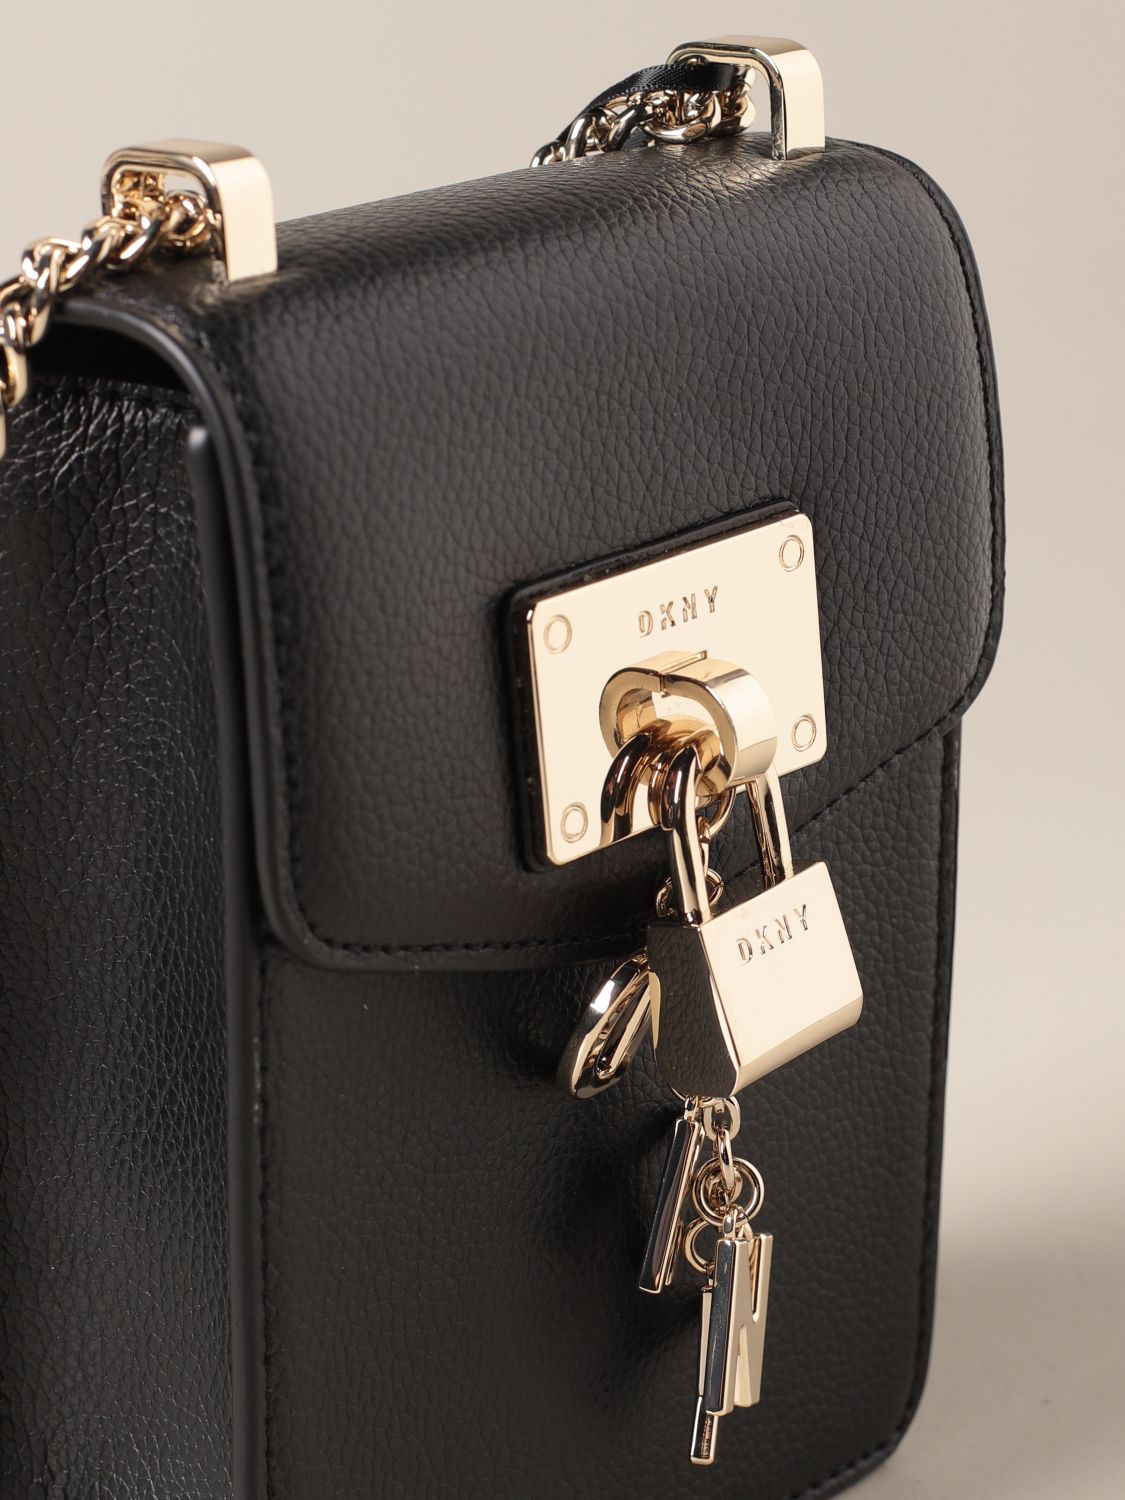 сумка DKNY Carol Medium Pouchette цвет black silver / черный с серебром